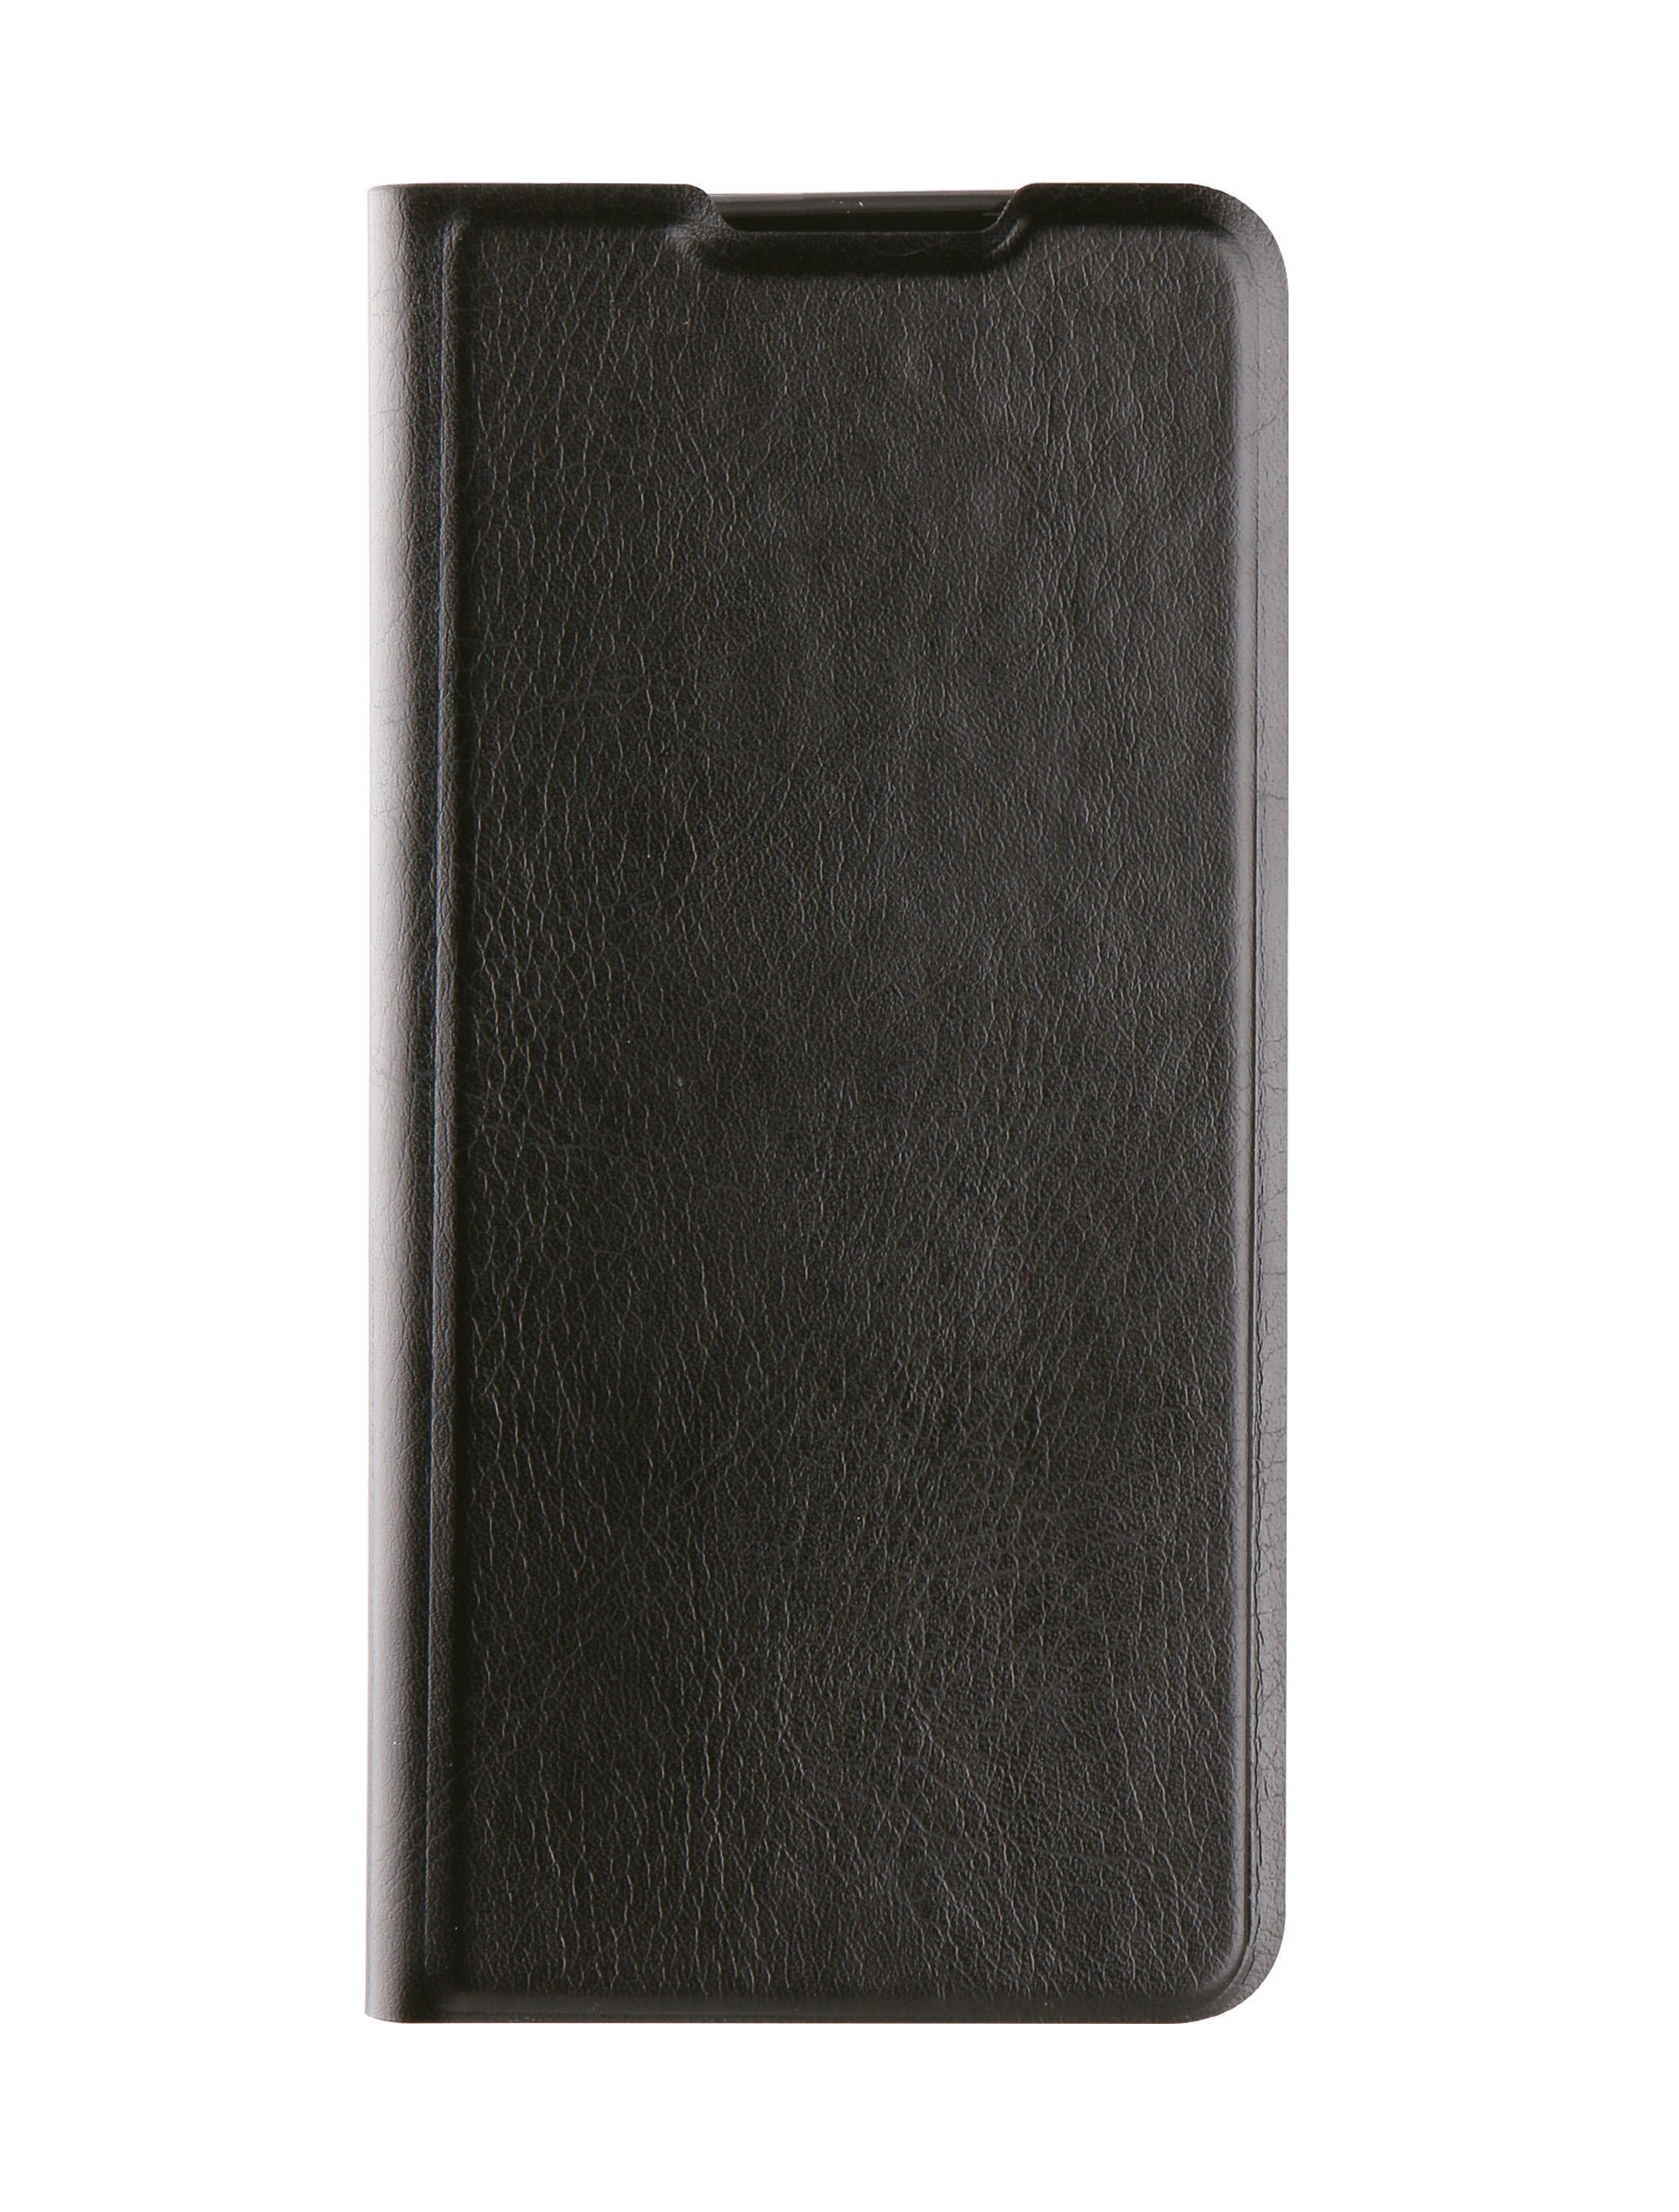 VIVANCO Premium Wallet, Bookcover, Huawei, Pro, P40 Schwarz